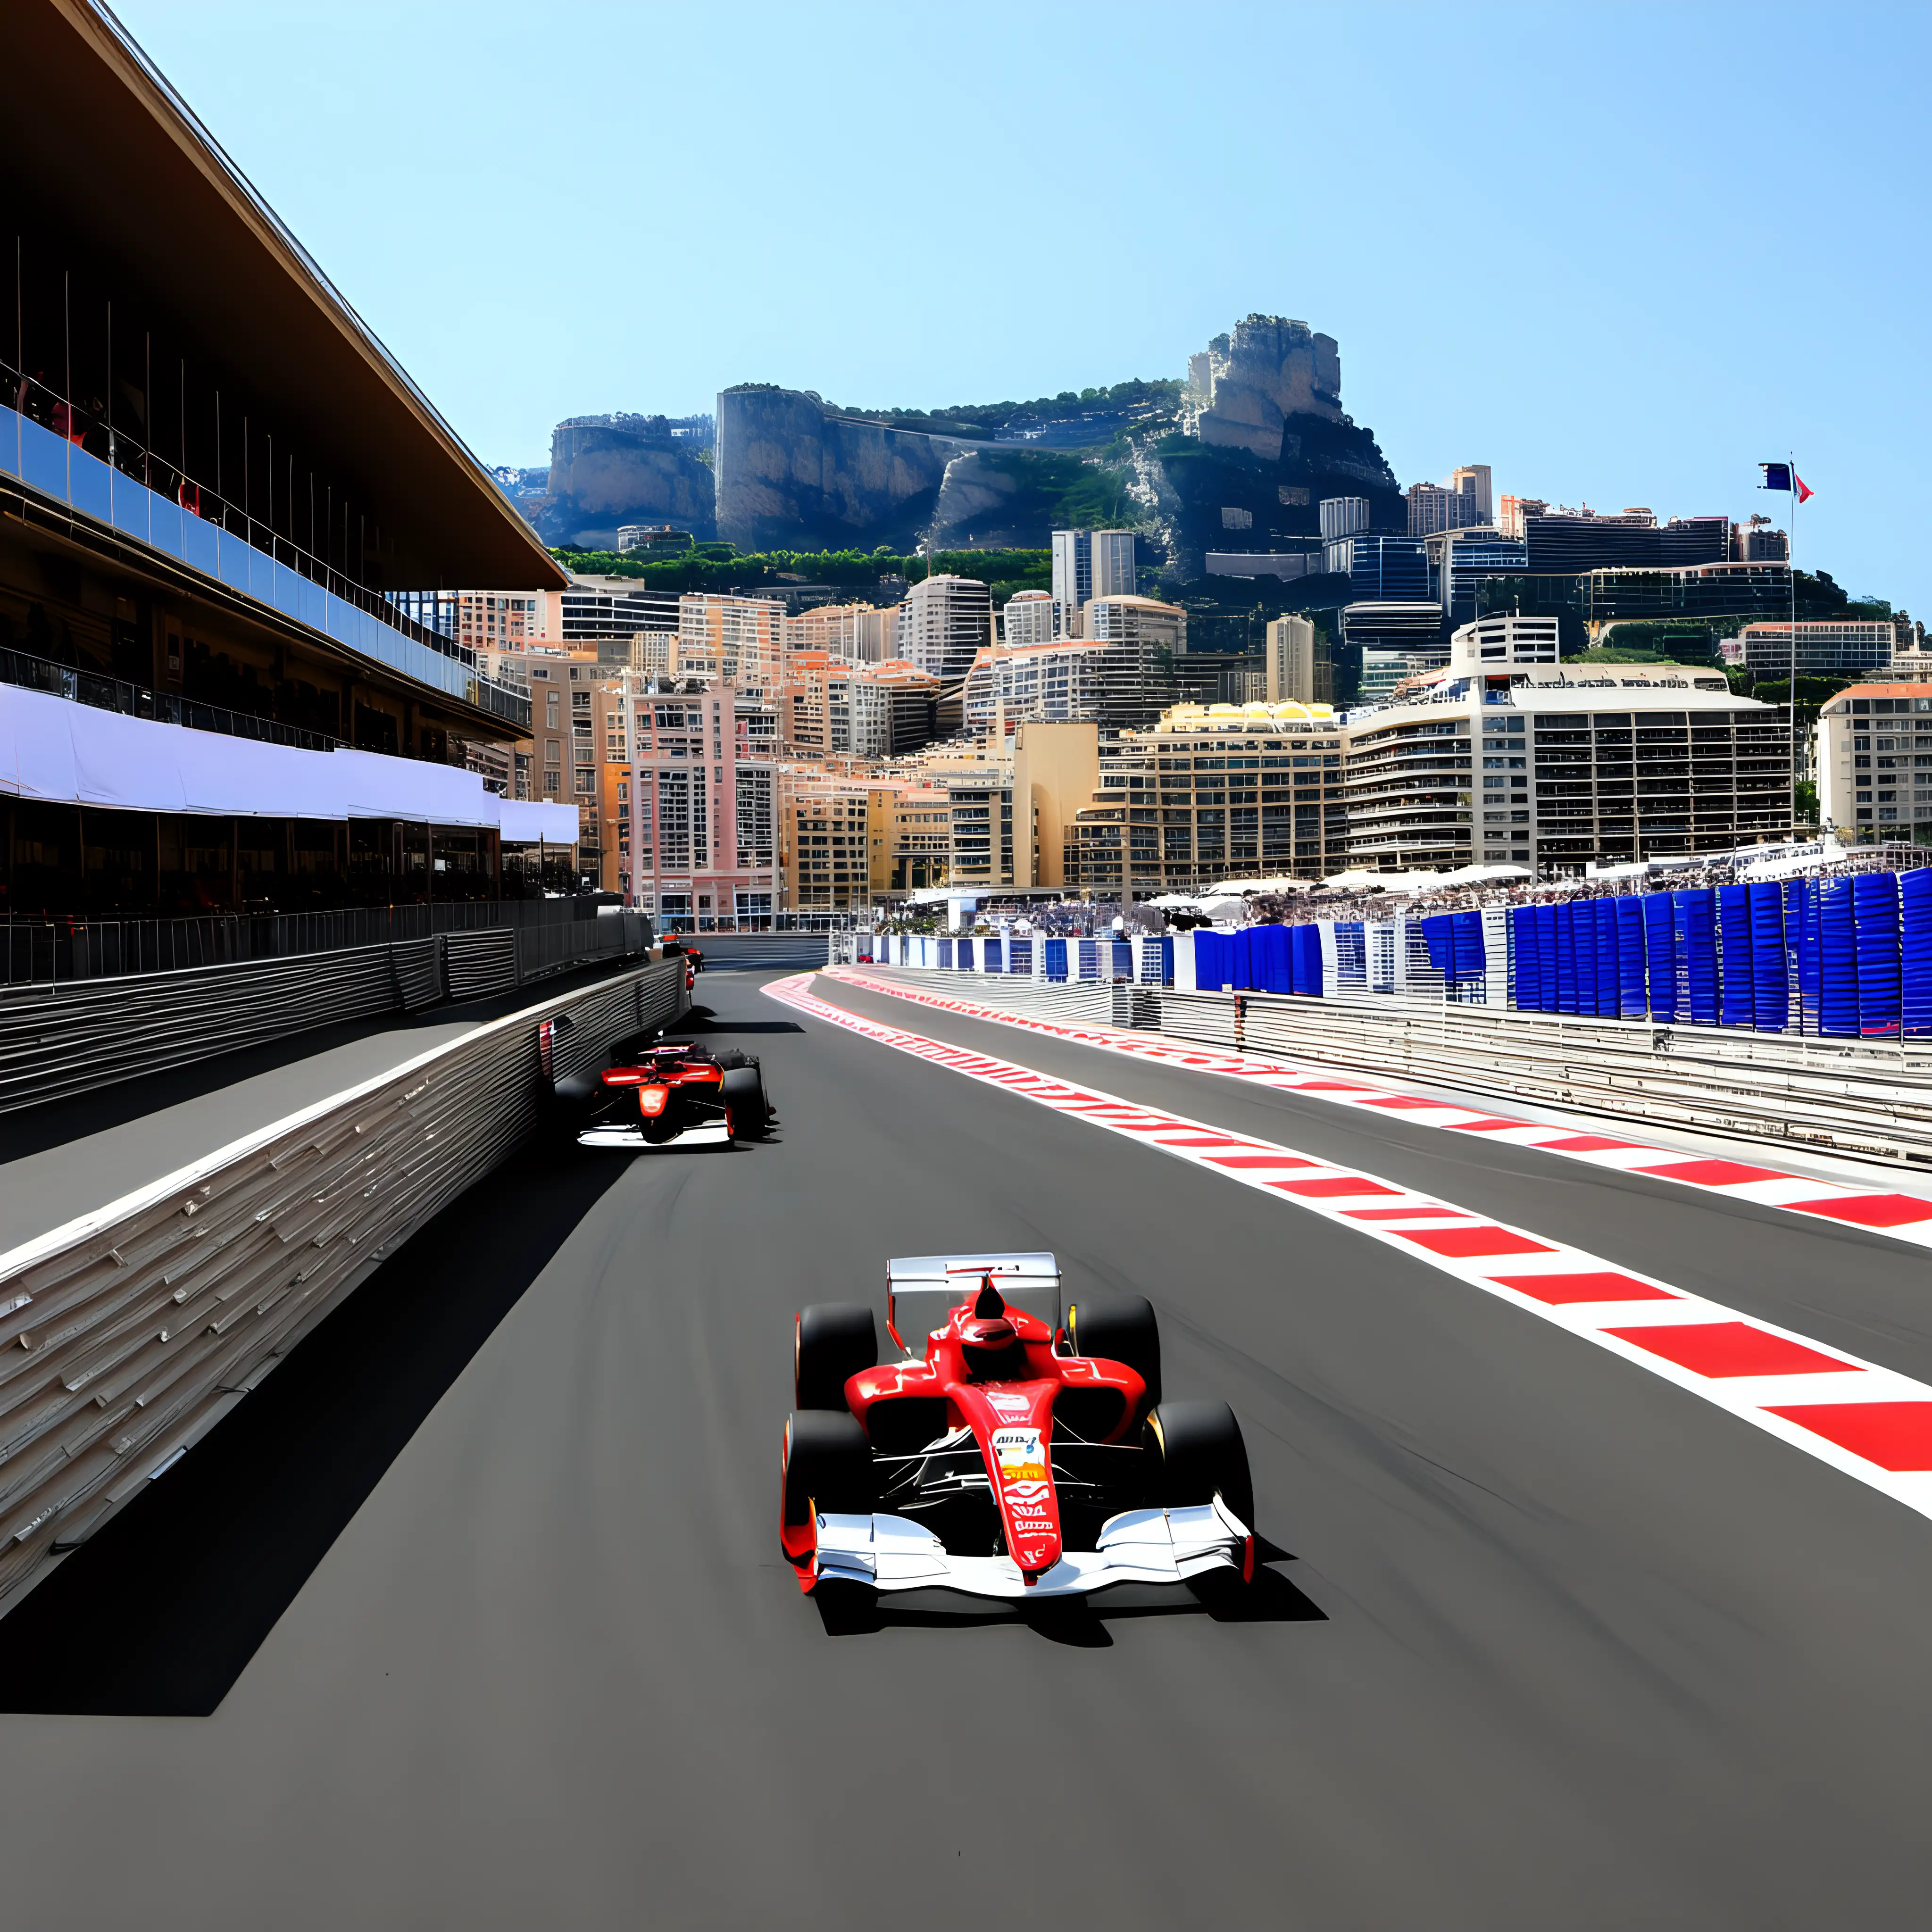 Exciting Grand Prix Action in Monaco